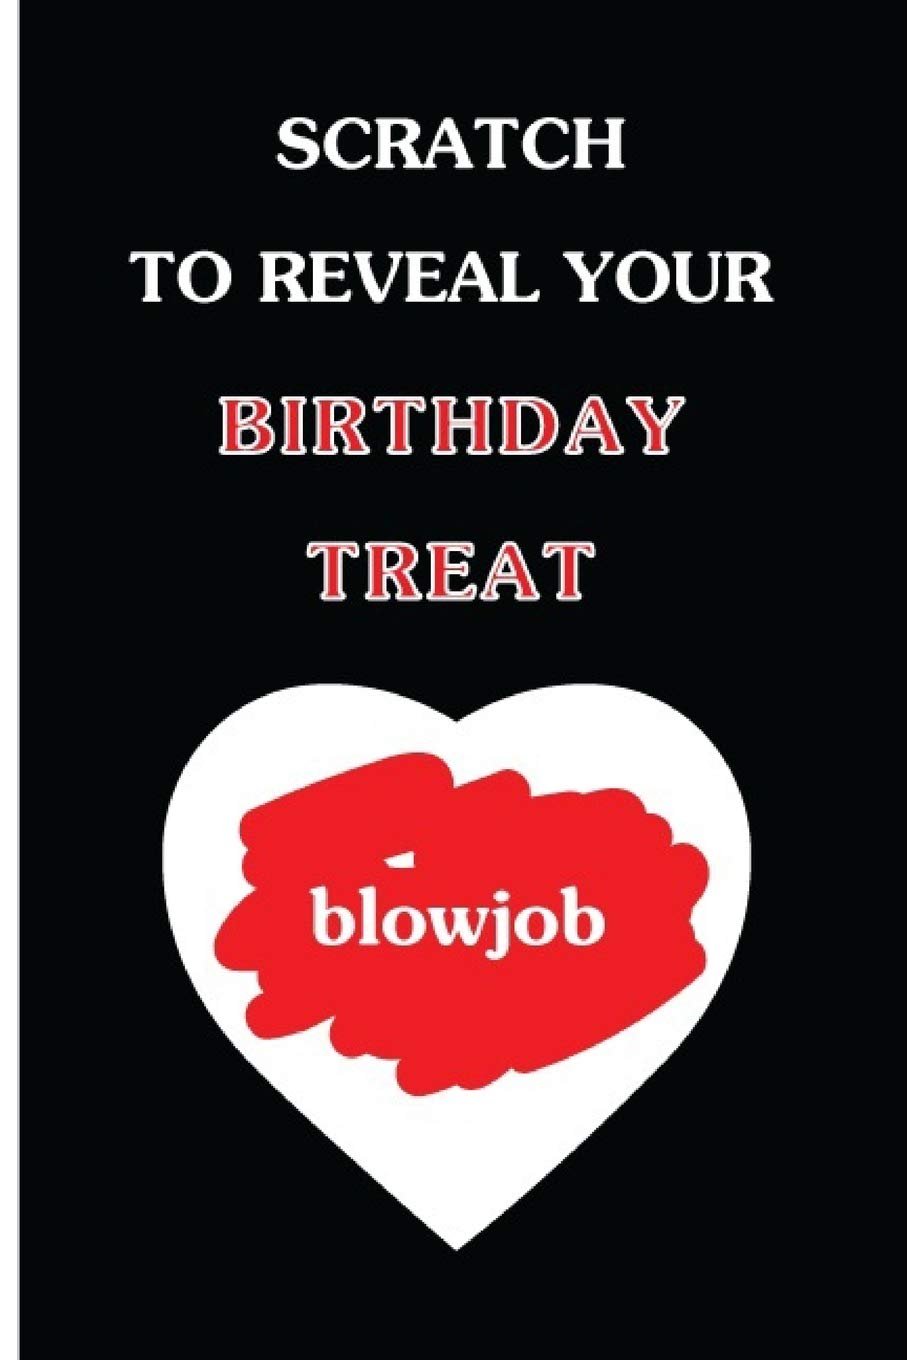 alan tritt reccomend Birthday Blow Job